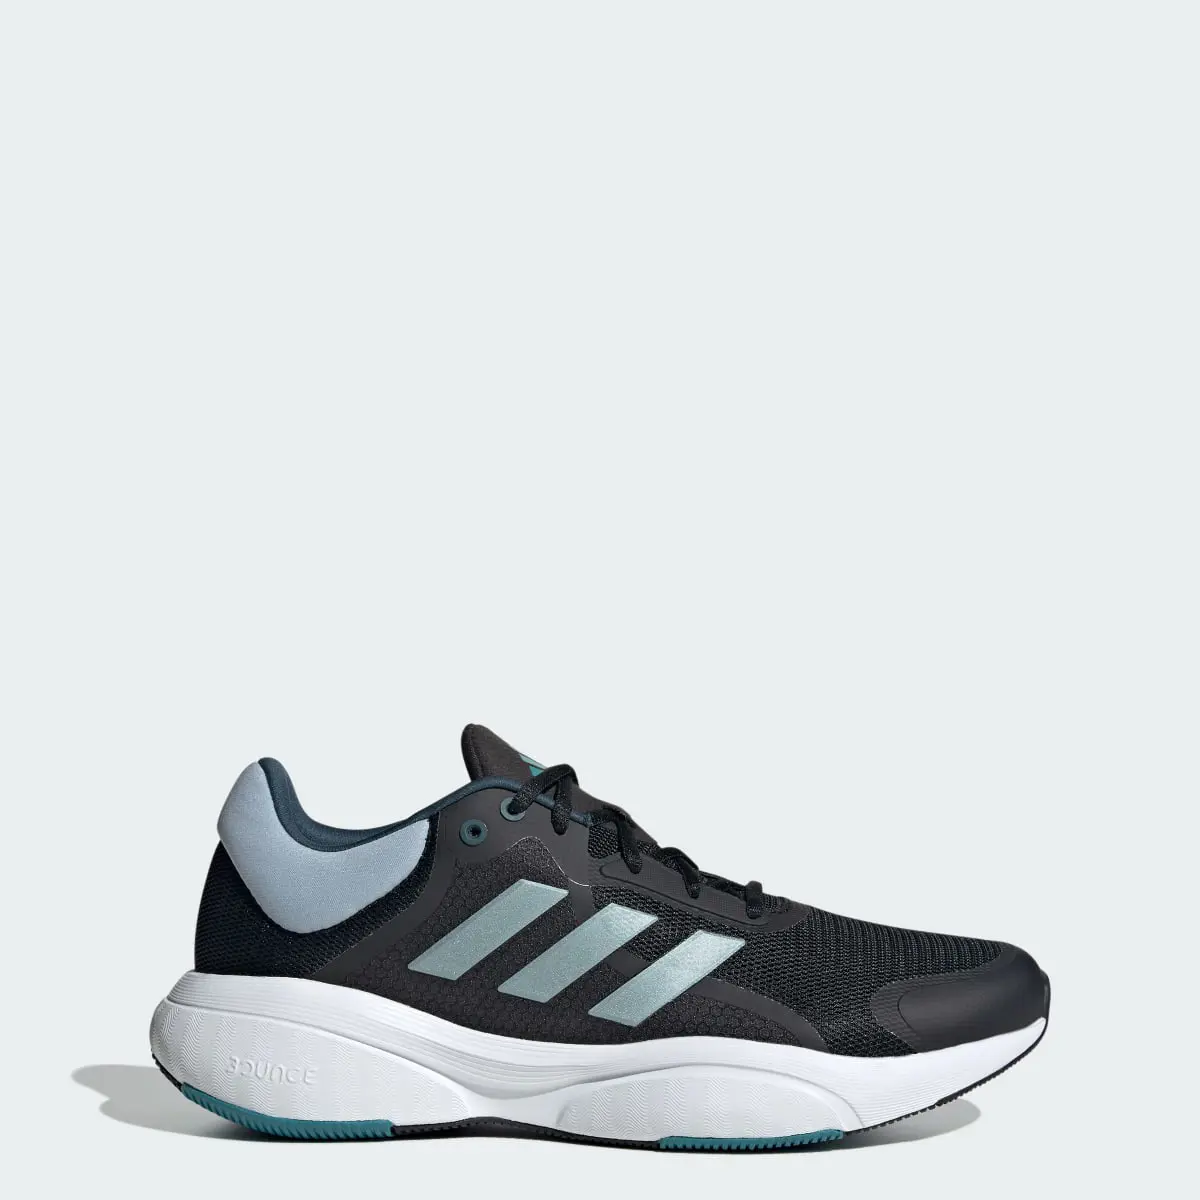 Adidas Response Ayakkabı. 1